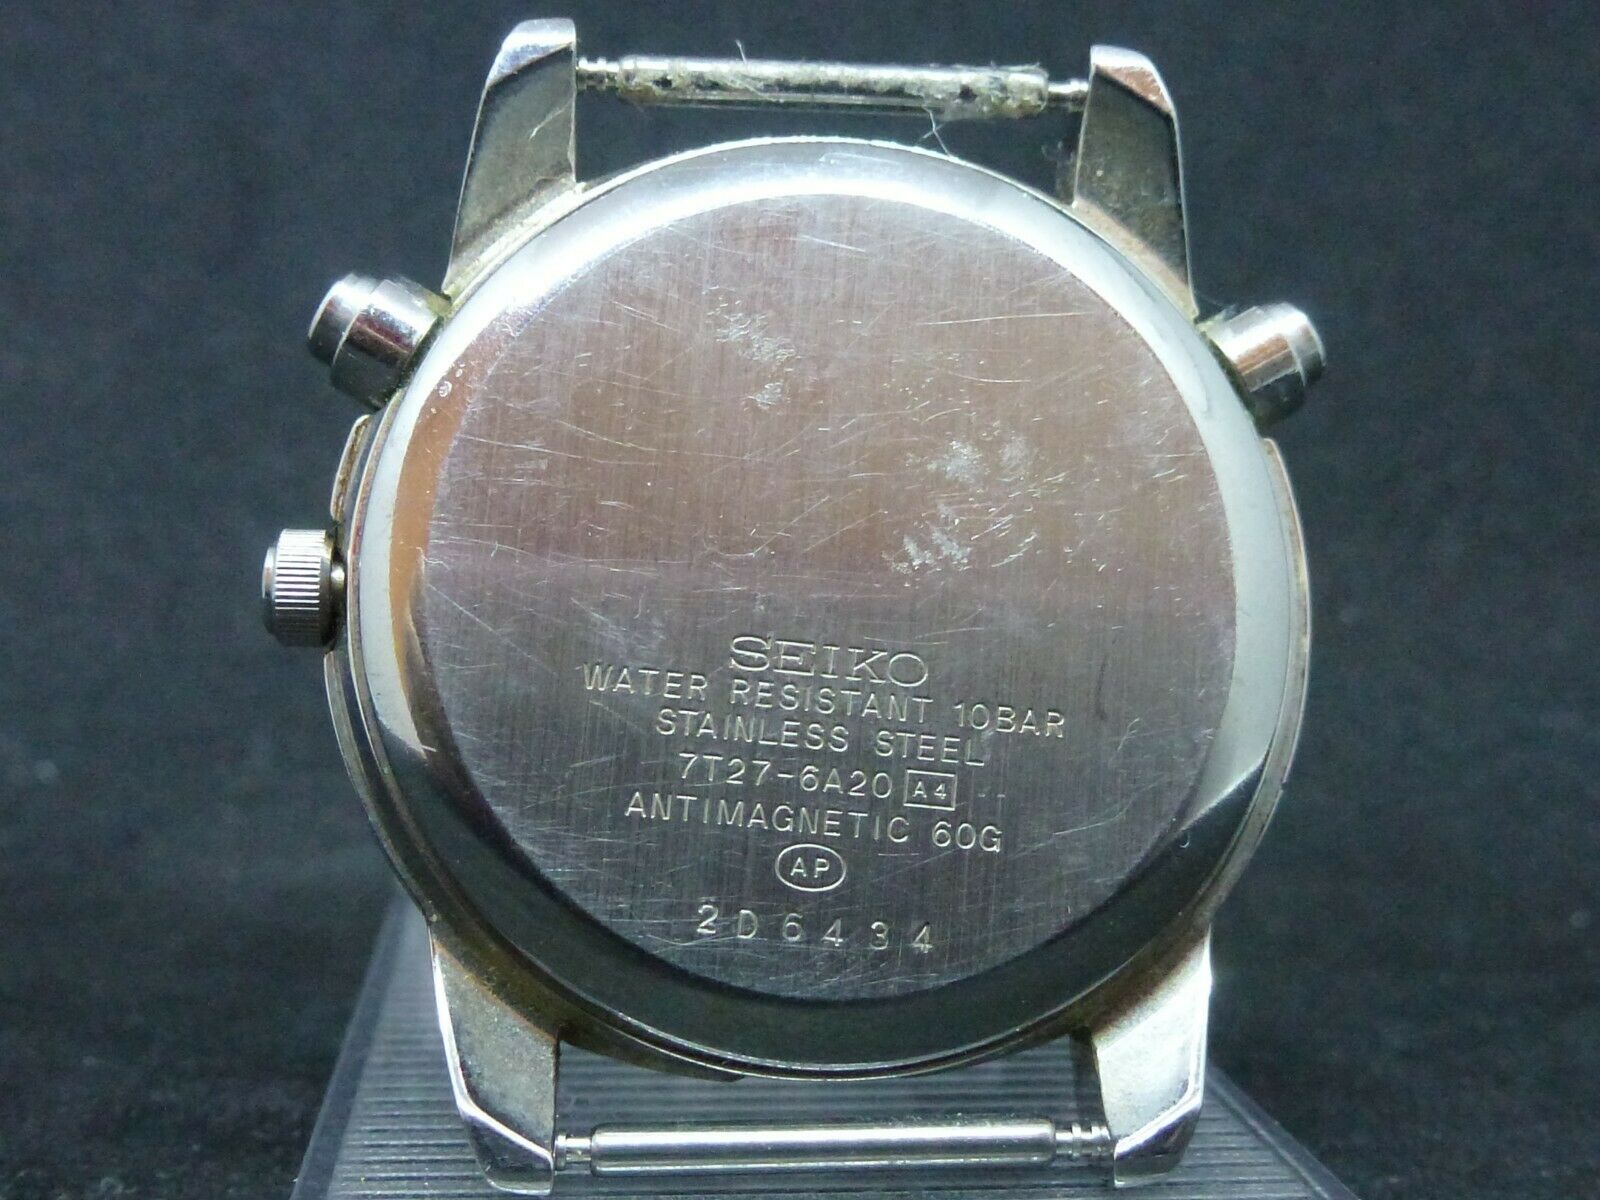 Vintage SEIKO AVENUE CHRONOGRAPH 7T27-6A20 Wrist Watch W637 